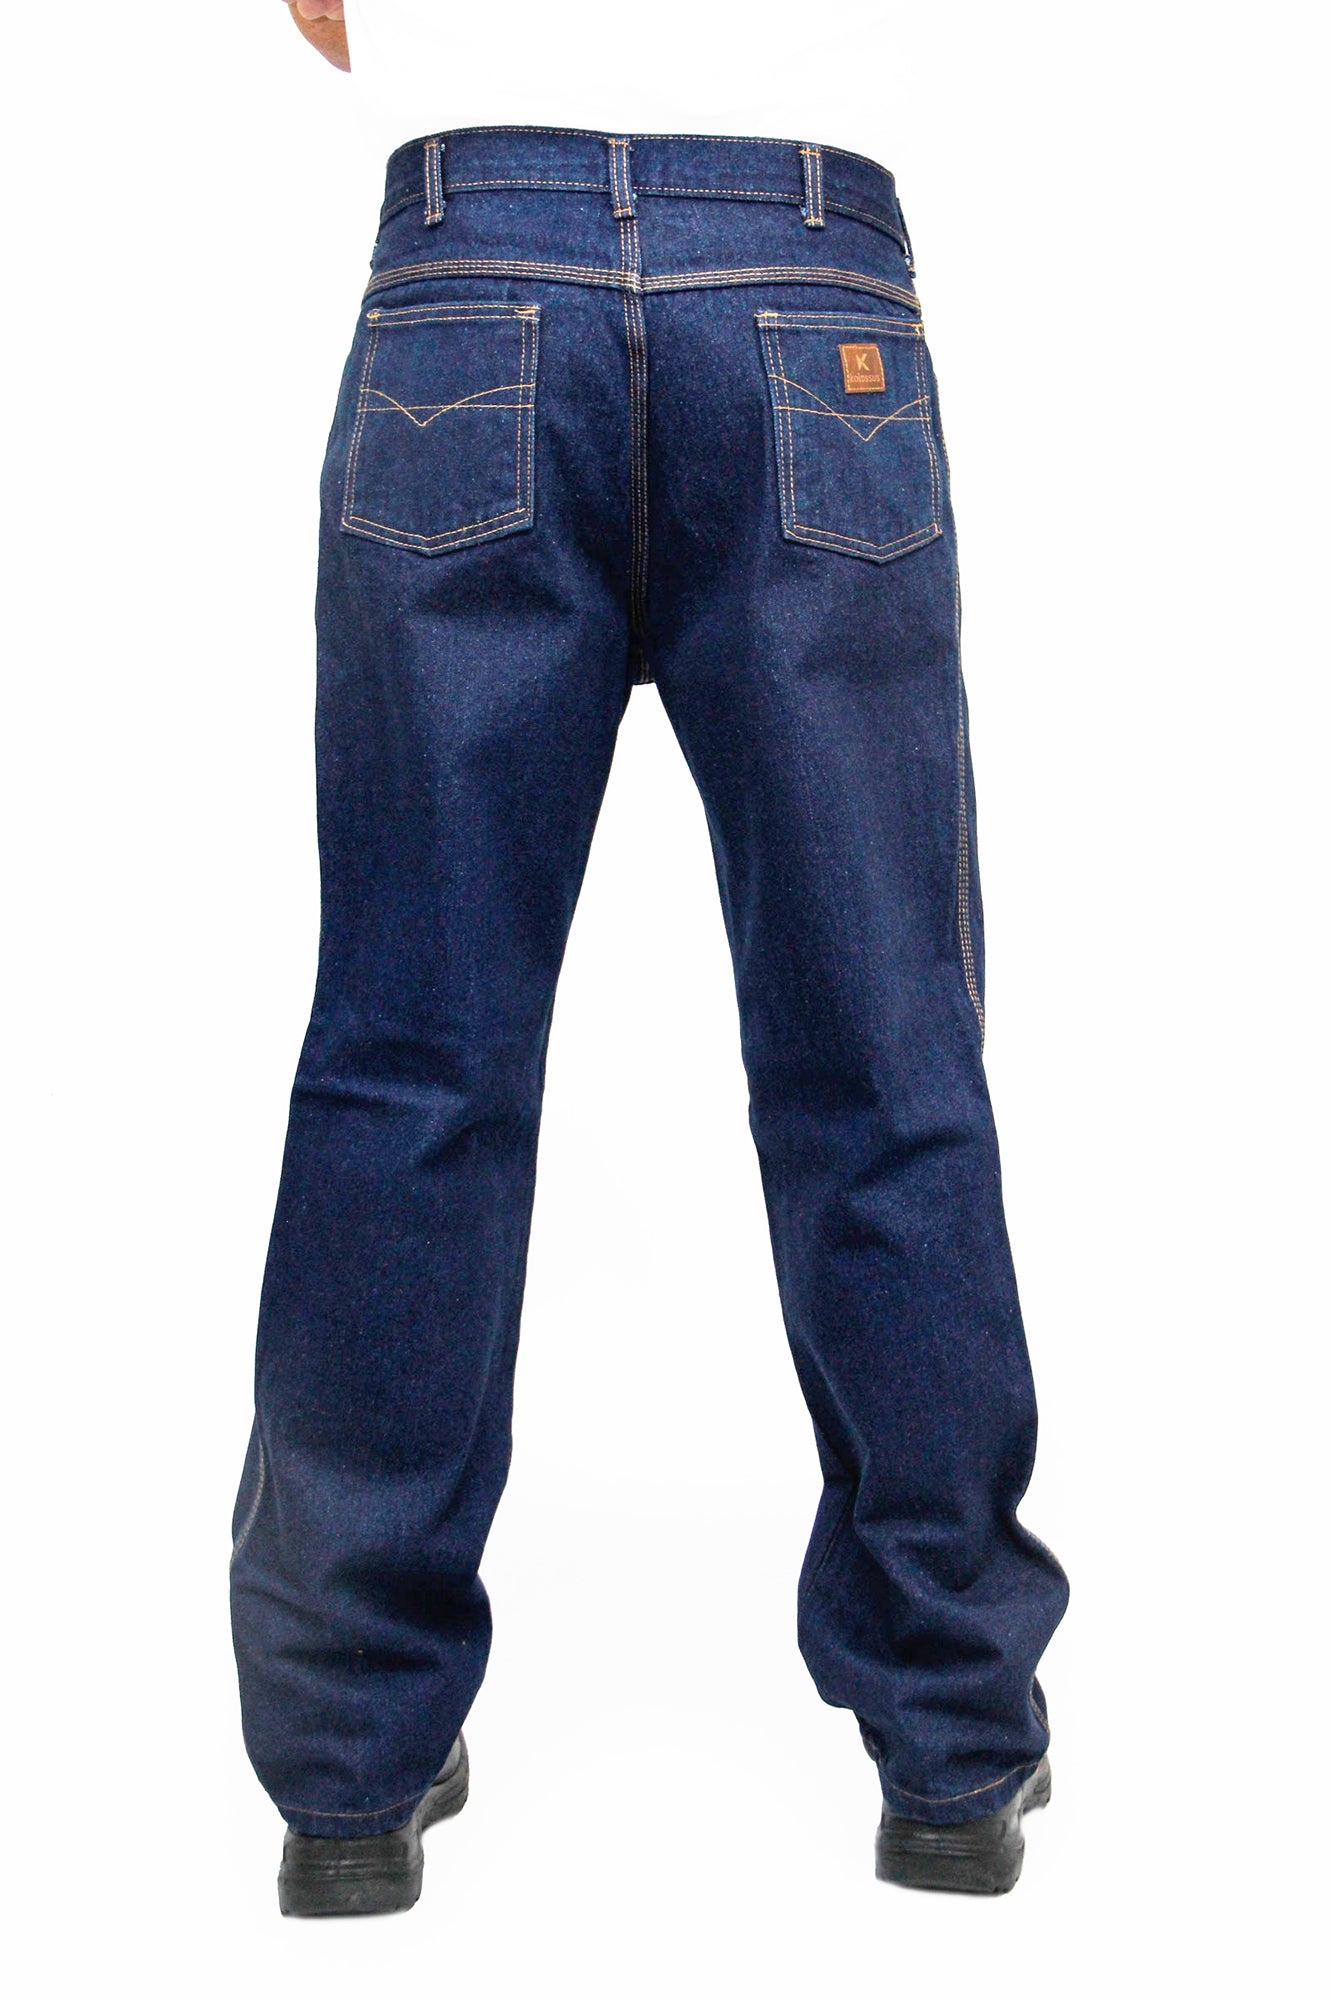 KJ01 - Kolossus Heavy Duty Straight Cut Five Pocket 100% Cotton Work Jeans  with Triple Seams